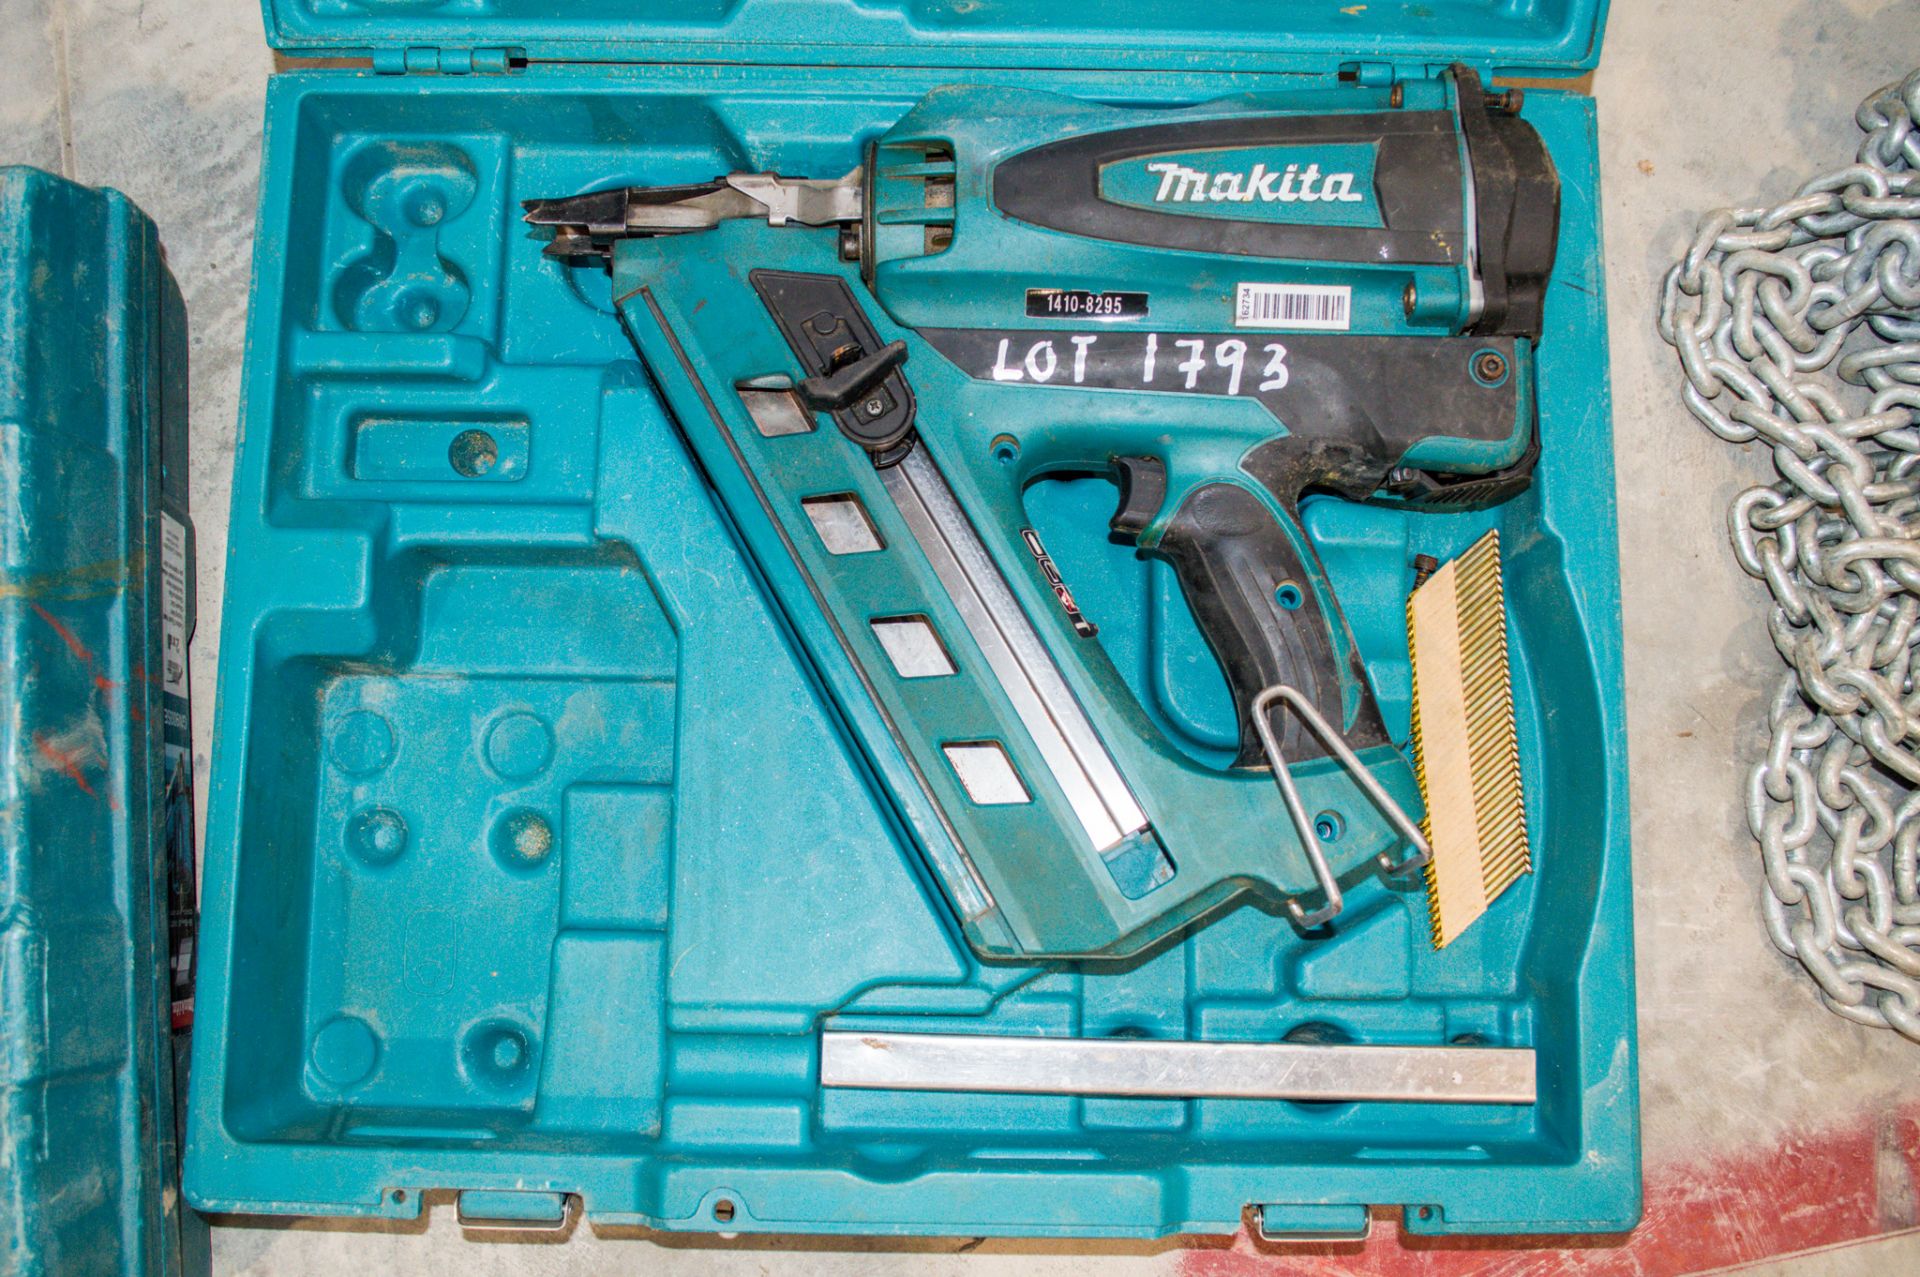 Makita GN900 7.2v cordless nail gun c/w carry case ** No batteries or charger ** 1410-8295